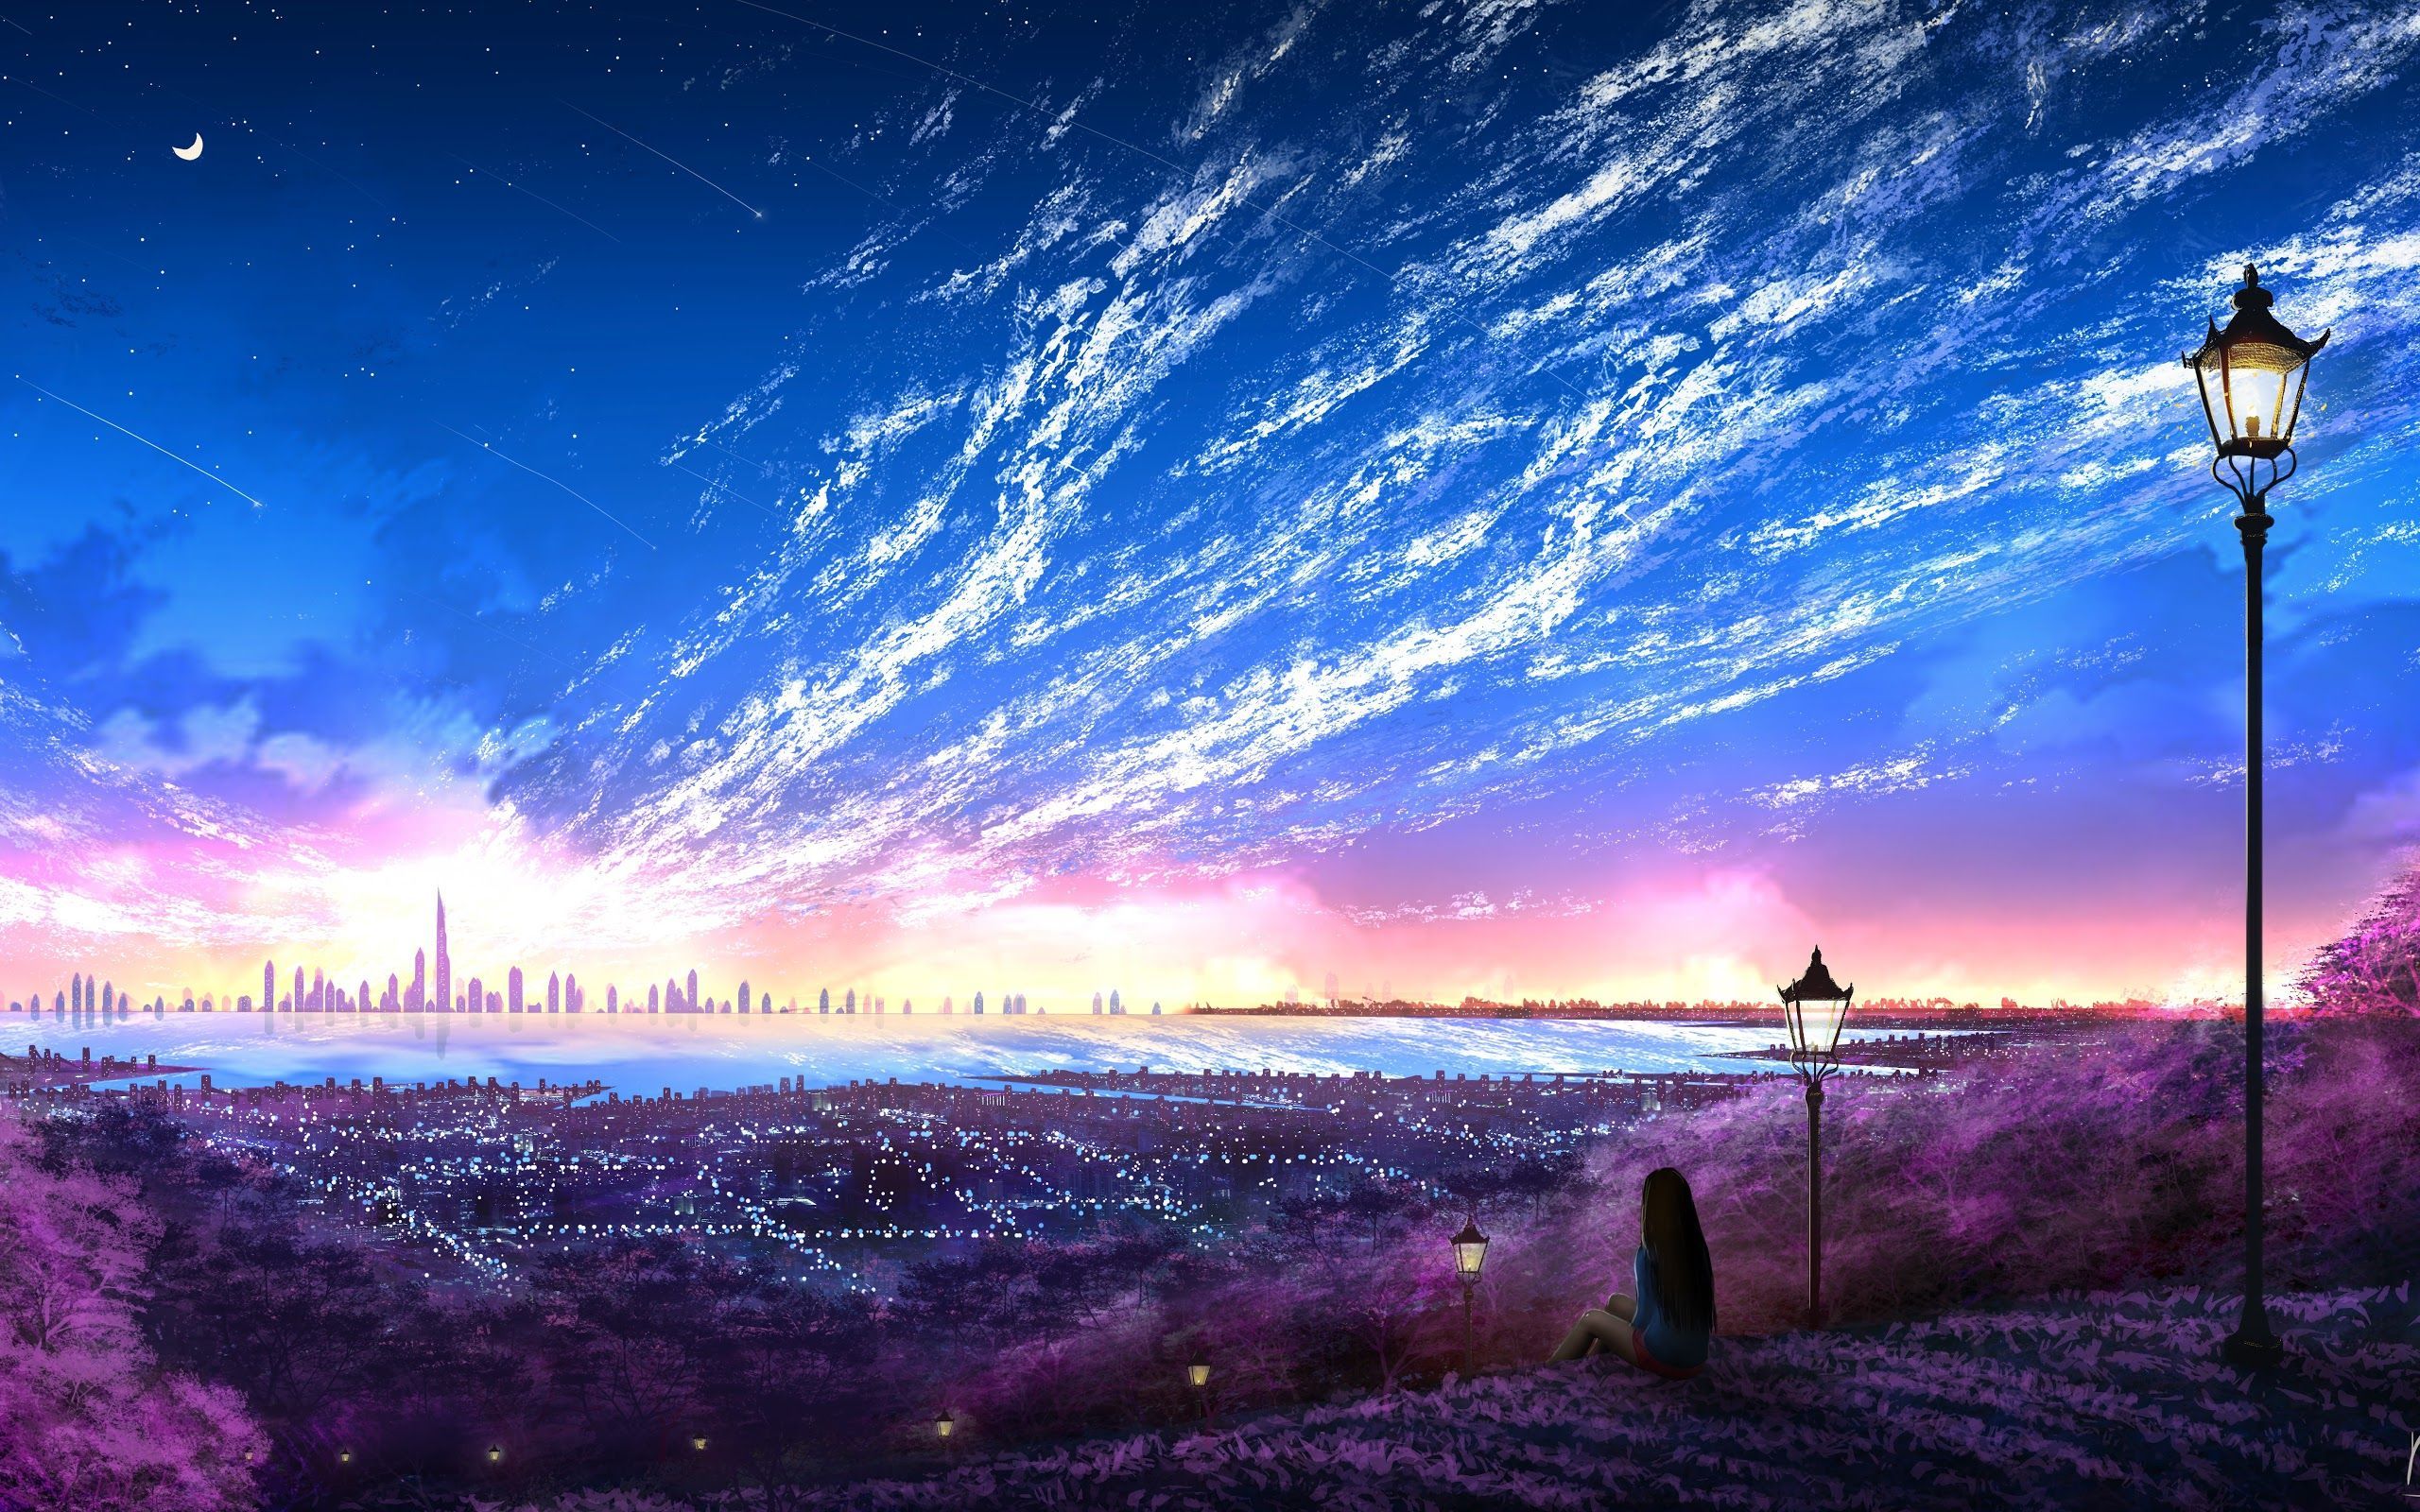 SKY CITY ANIME 2560 X 1600 wallpaper. Scenery wallpaper, Anime scenery wallpaper, HD anime wallpaper